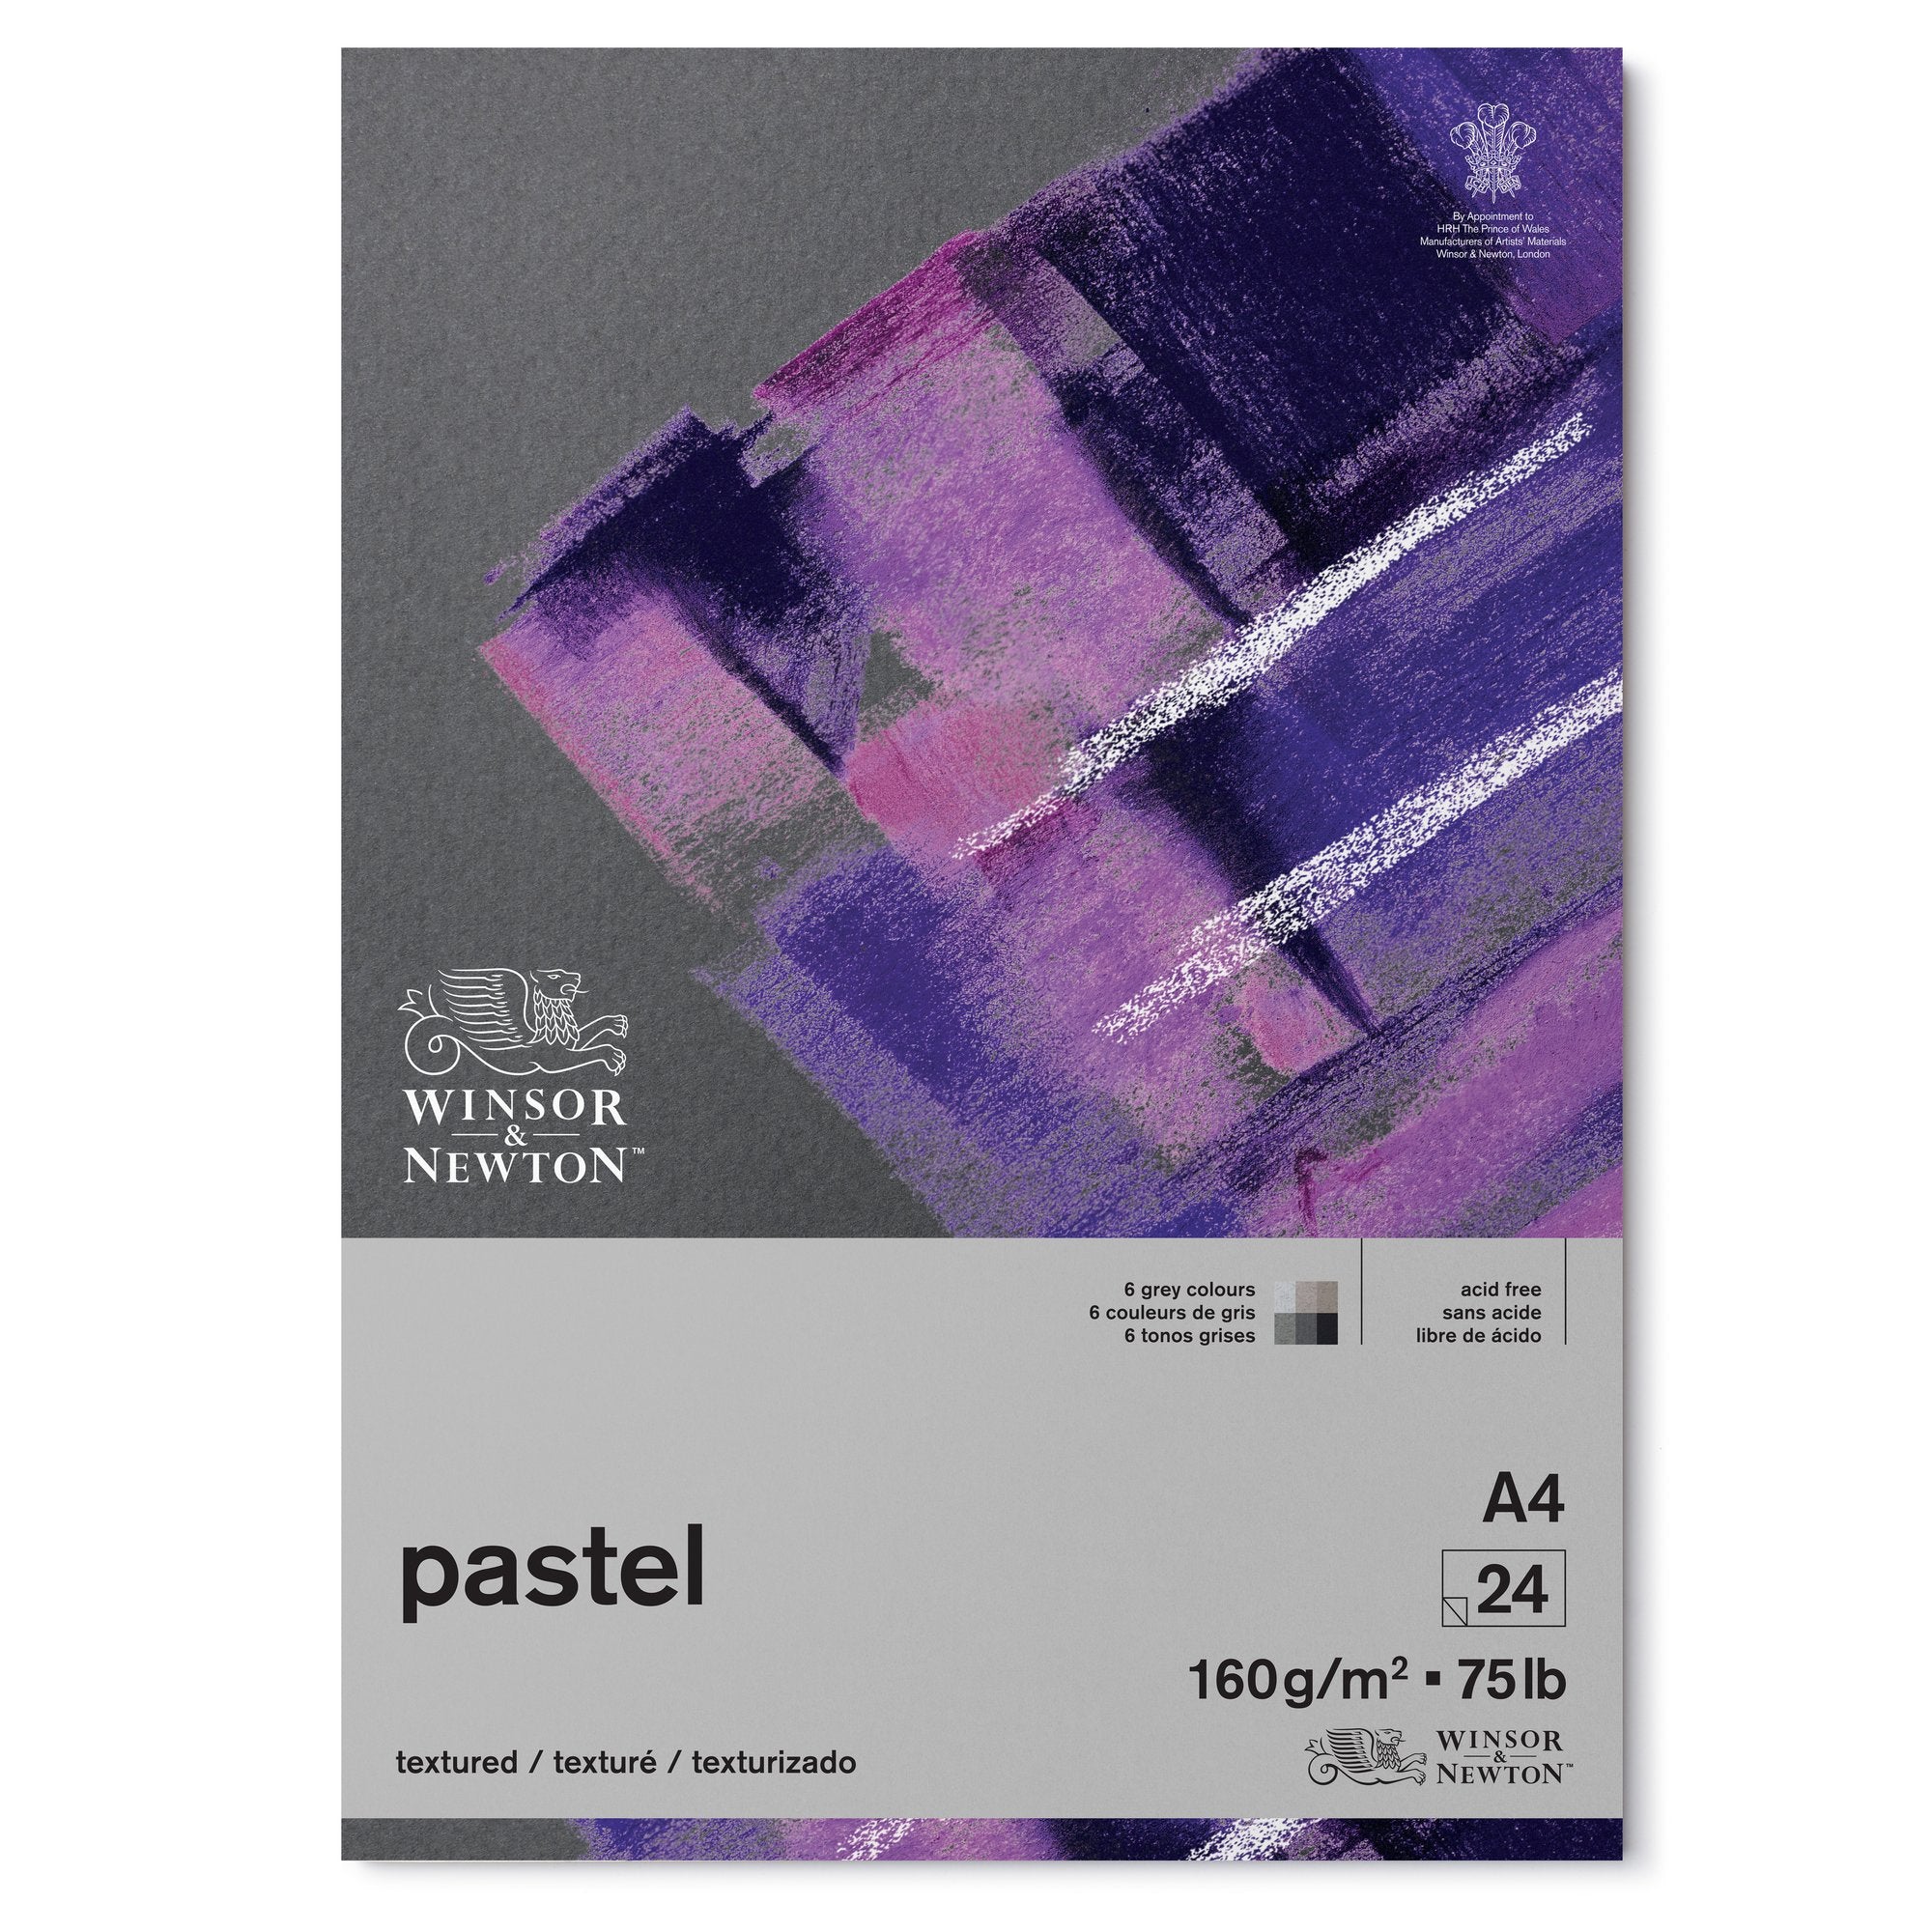 OIL PASTEL PAPER Pad Pulp Pastels Acrylic Pulp Paint Drawing Paper Glossy  $10.89 - PicClick AU